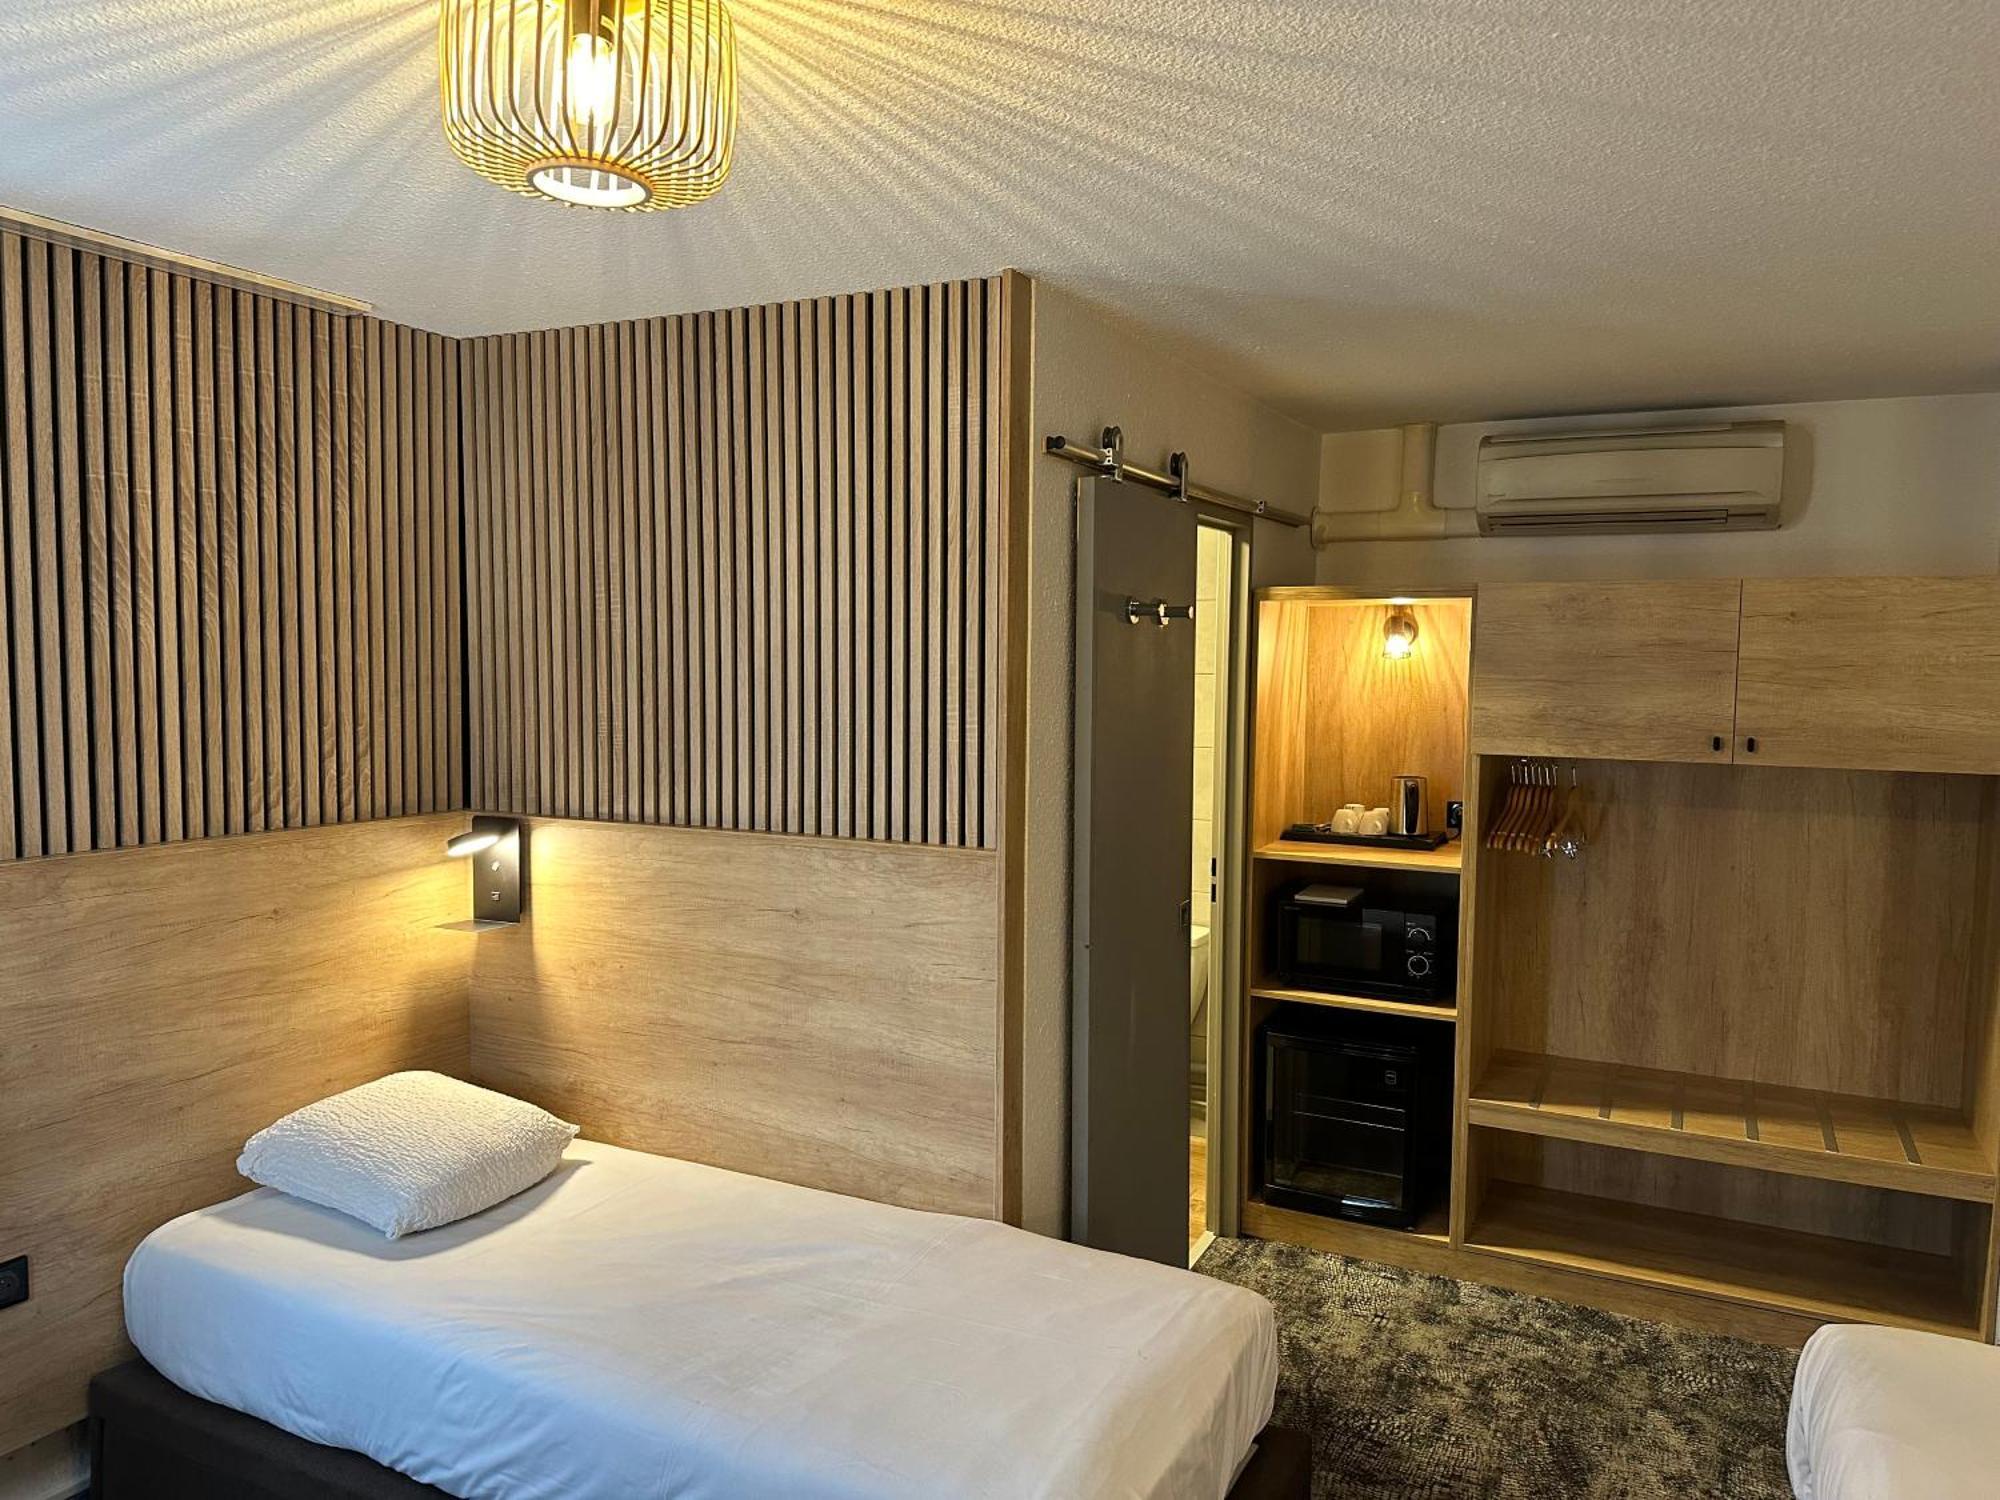 Ostal Pau Universite - Sure Hotel Collection By Best Western Exterior foto